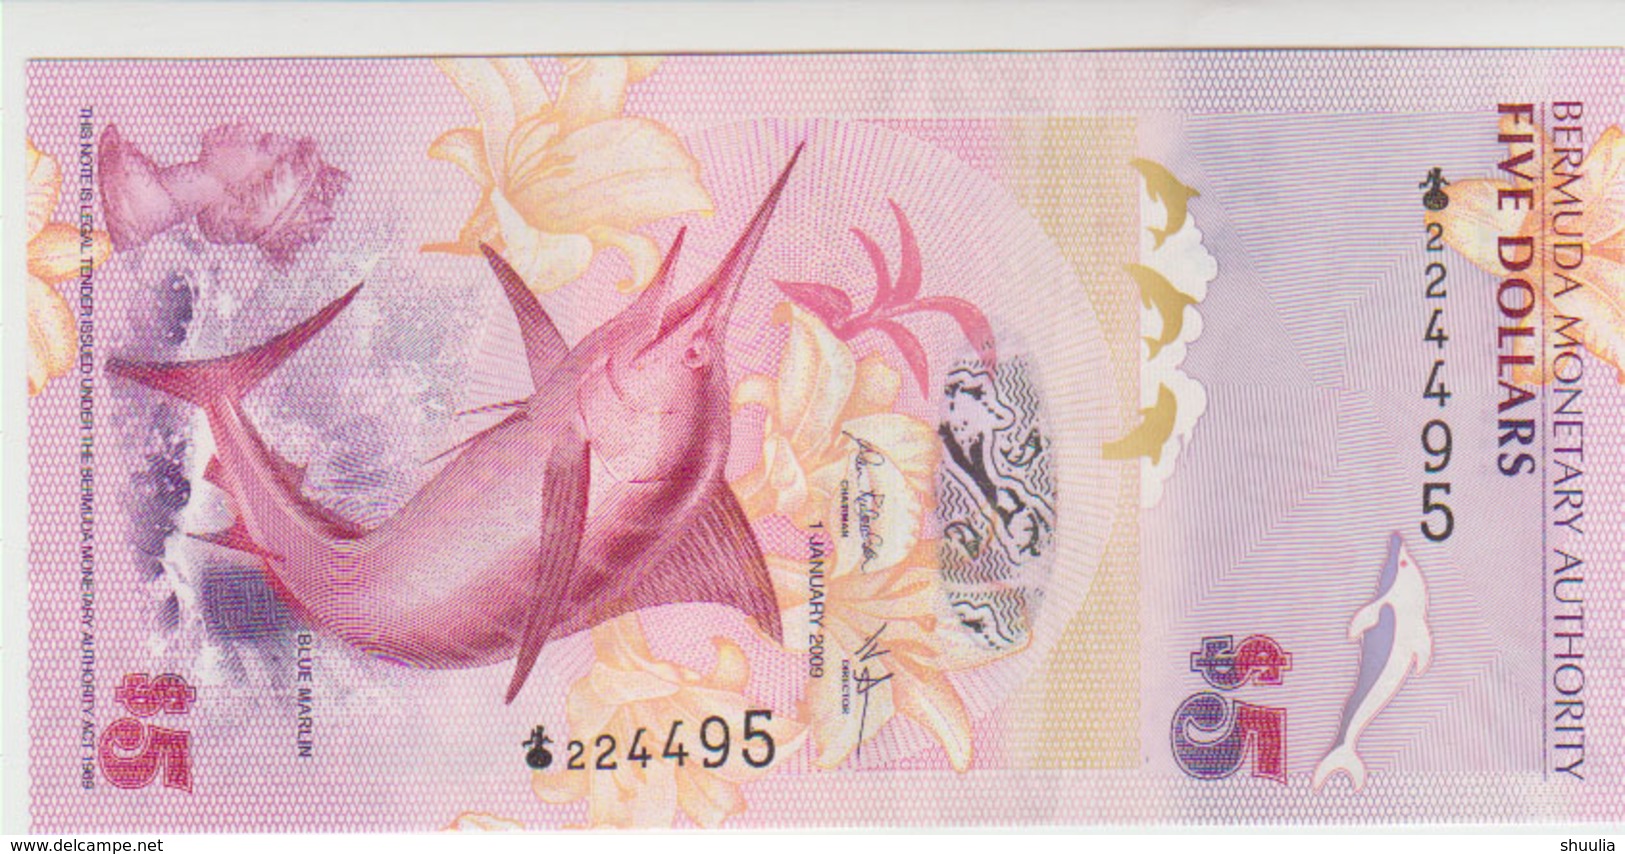 Bermudas 5 Dollars 2009 Pick 58a UNC - Bermuda